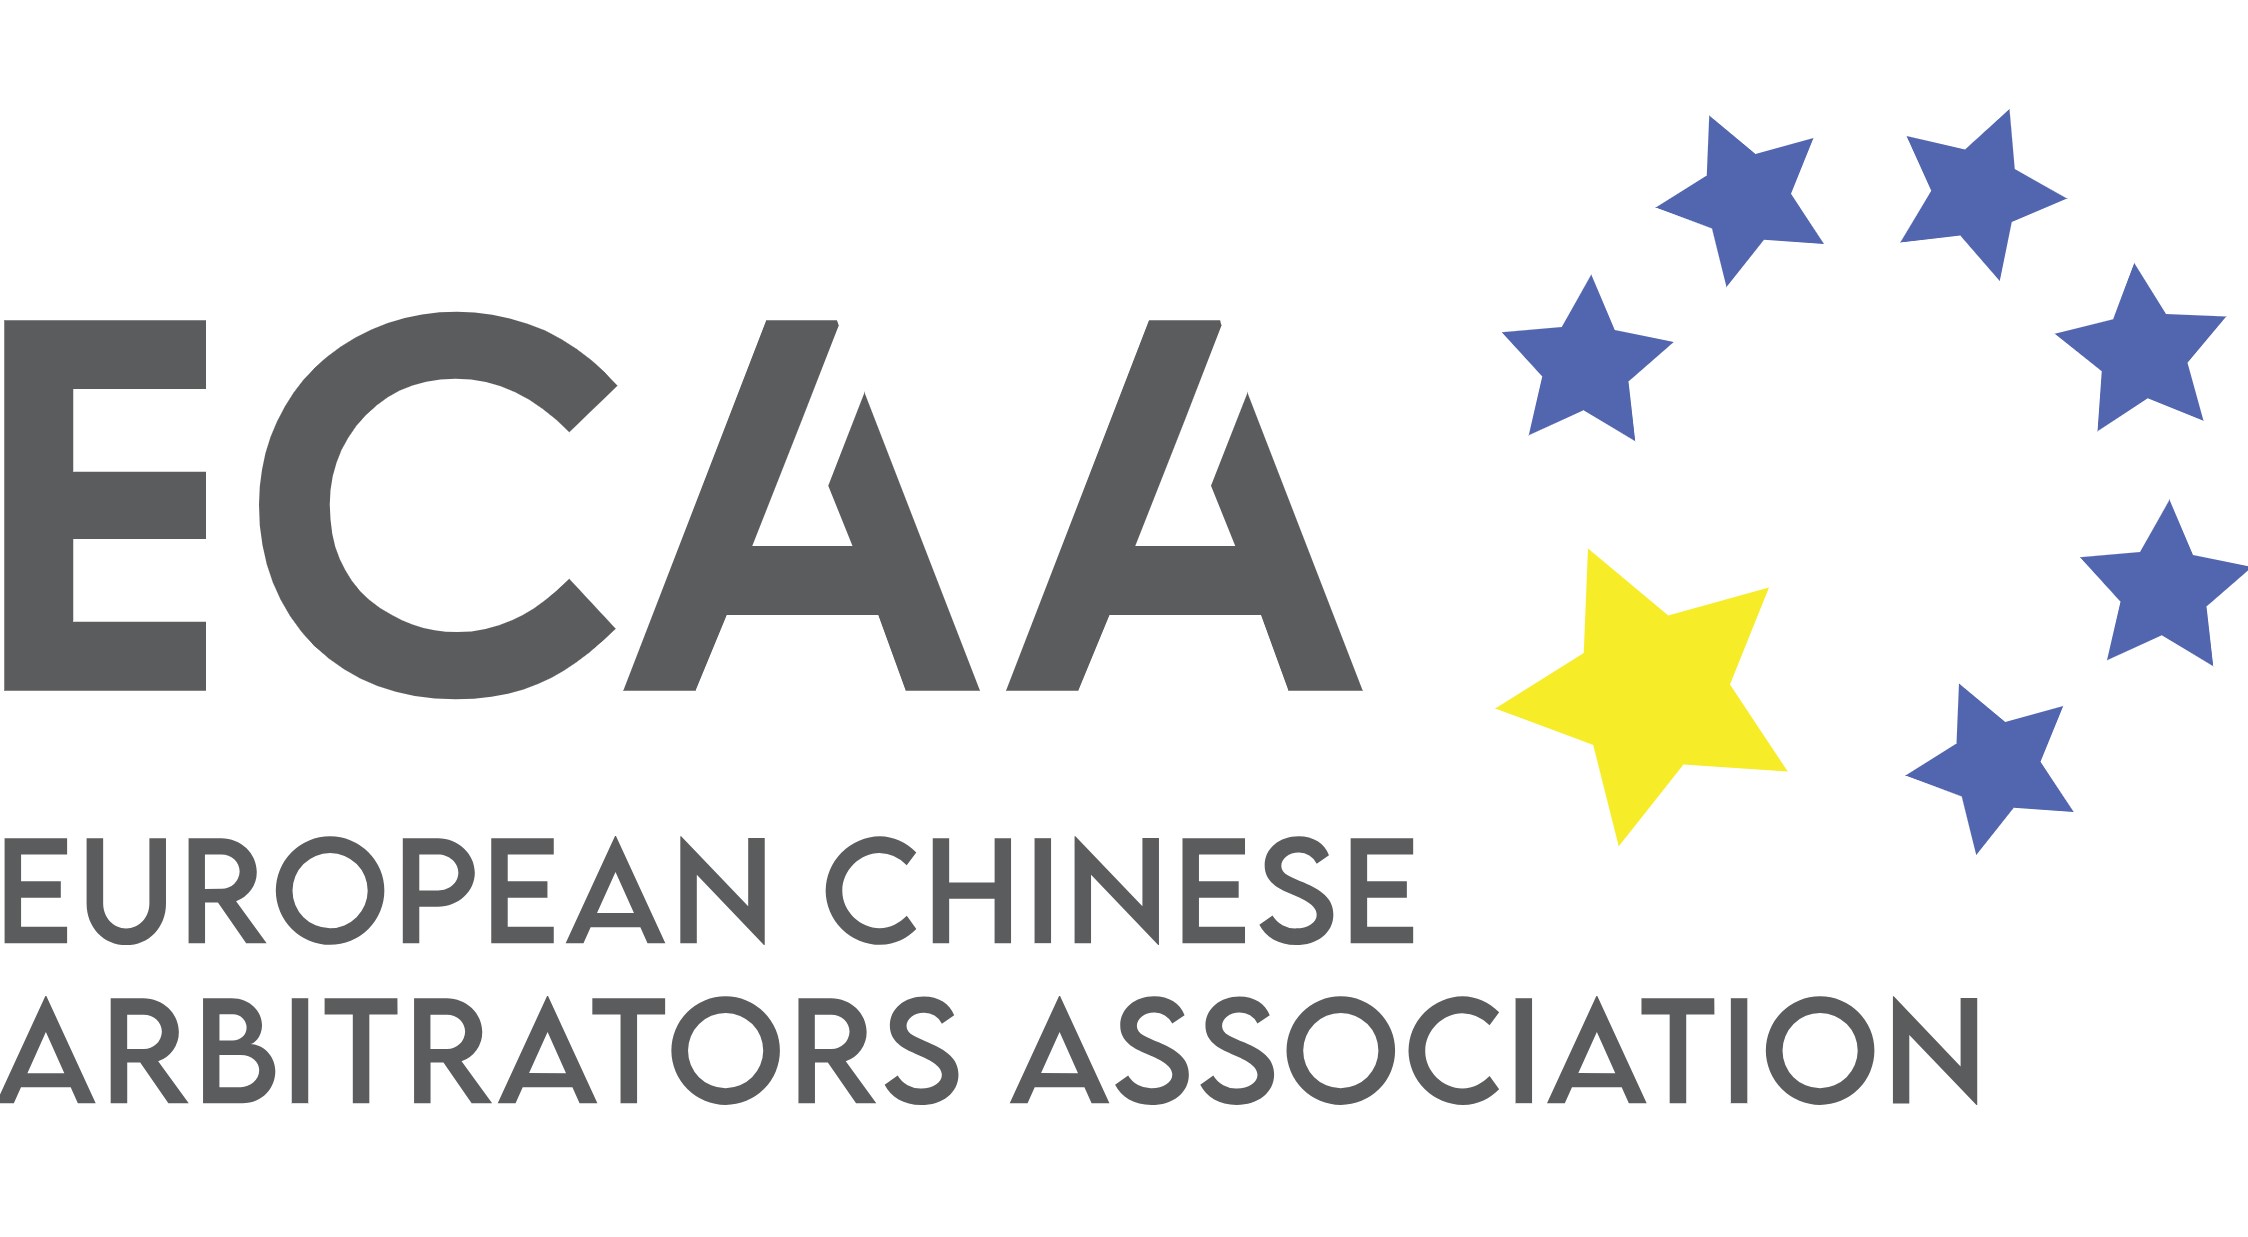 European Chinese Arbitrators Association